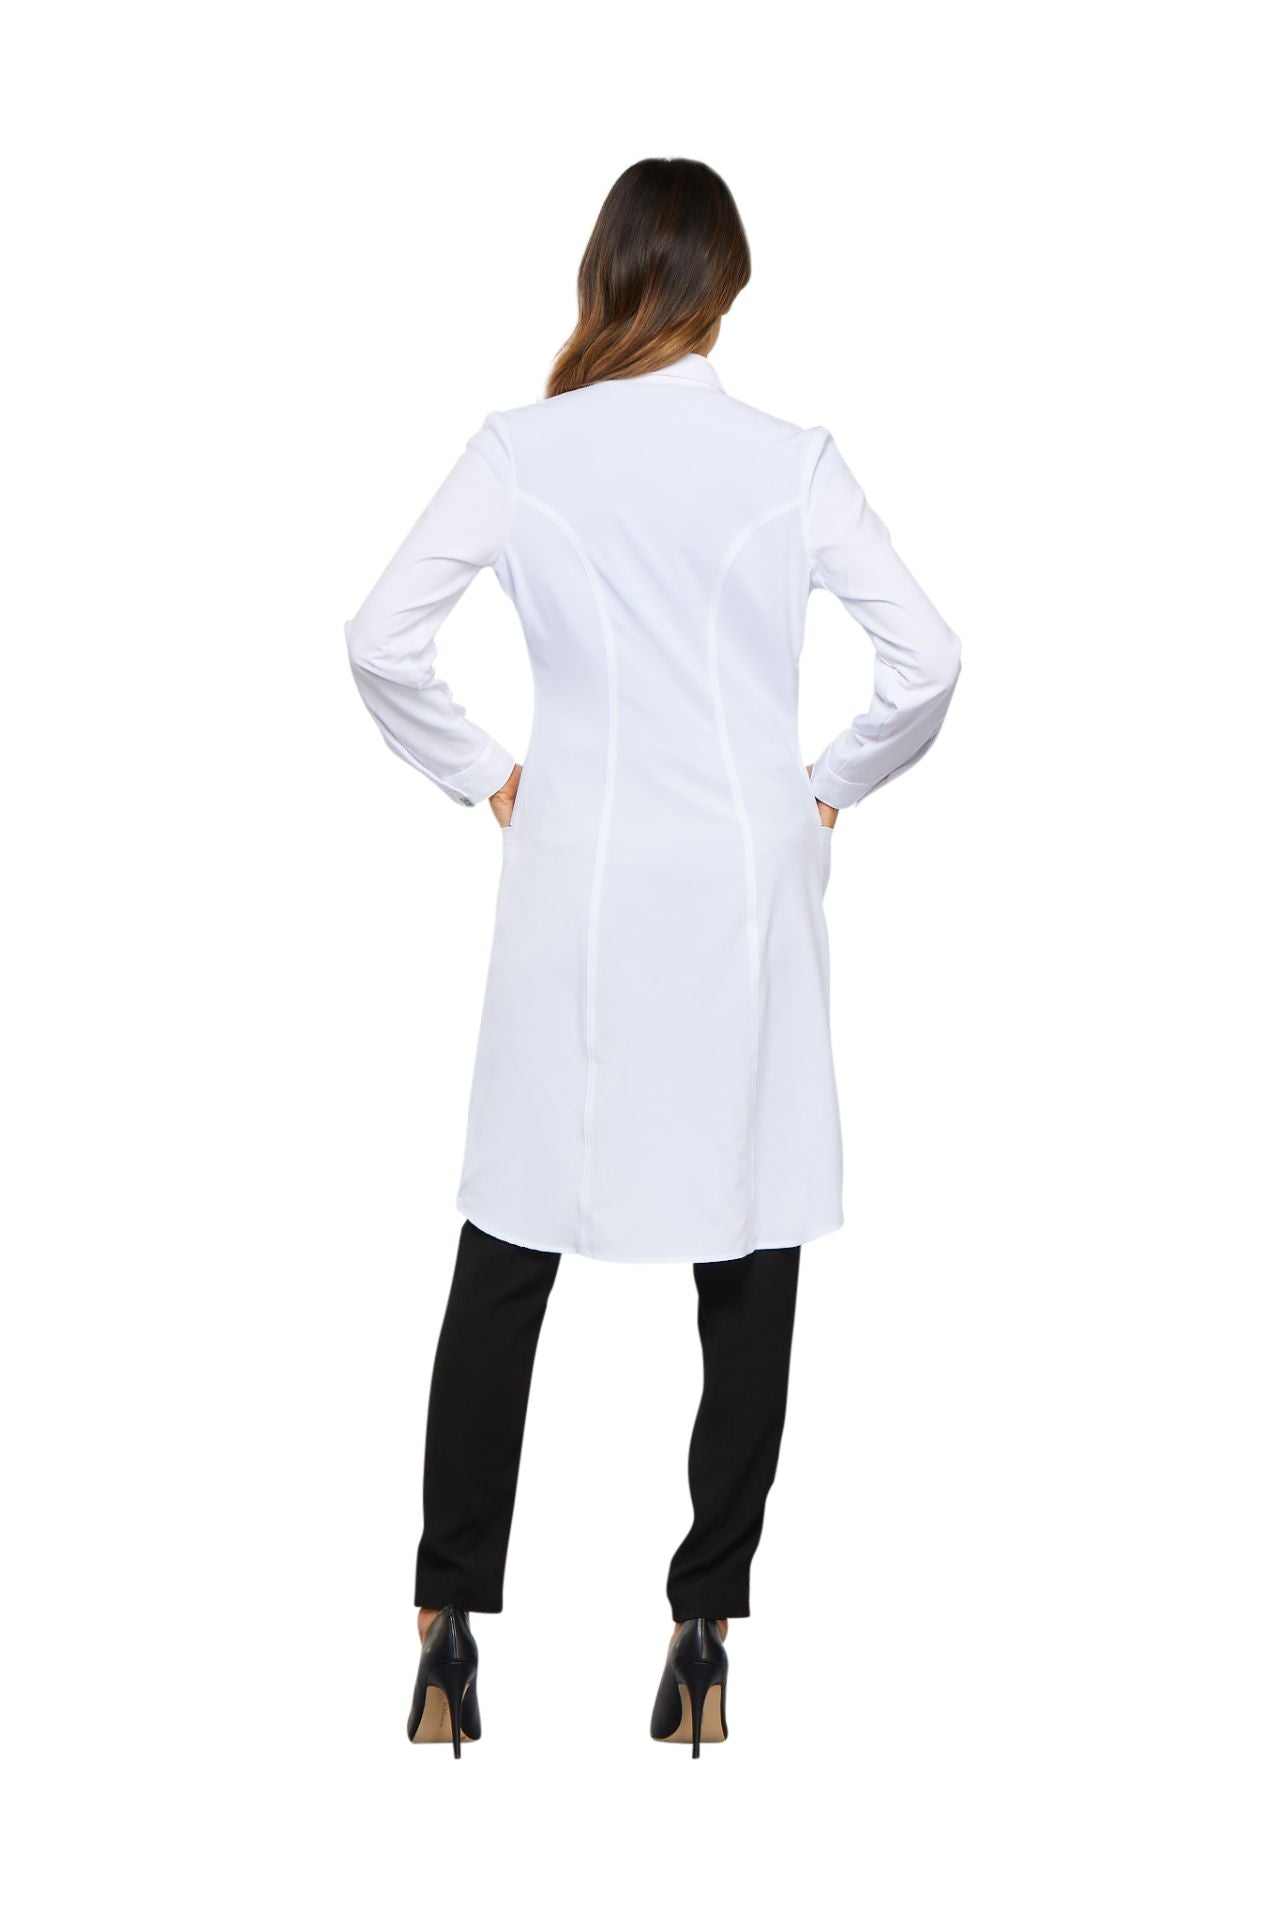 White - Cherokee Infinity 40" Women's Antimicrobial Lab Coat